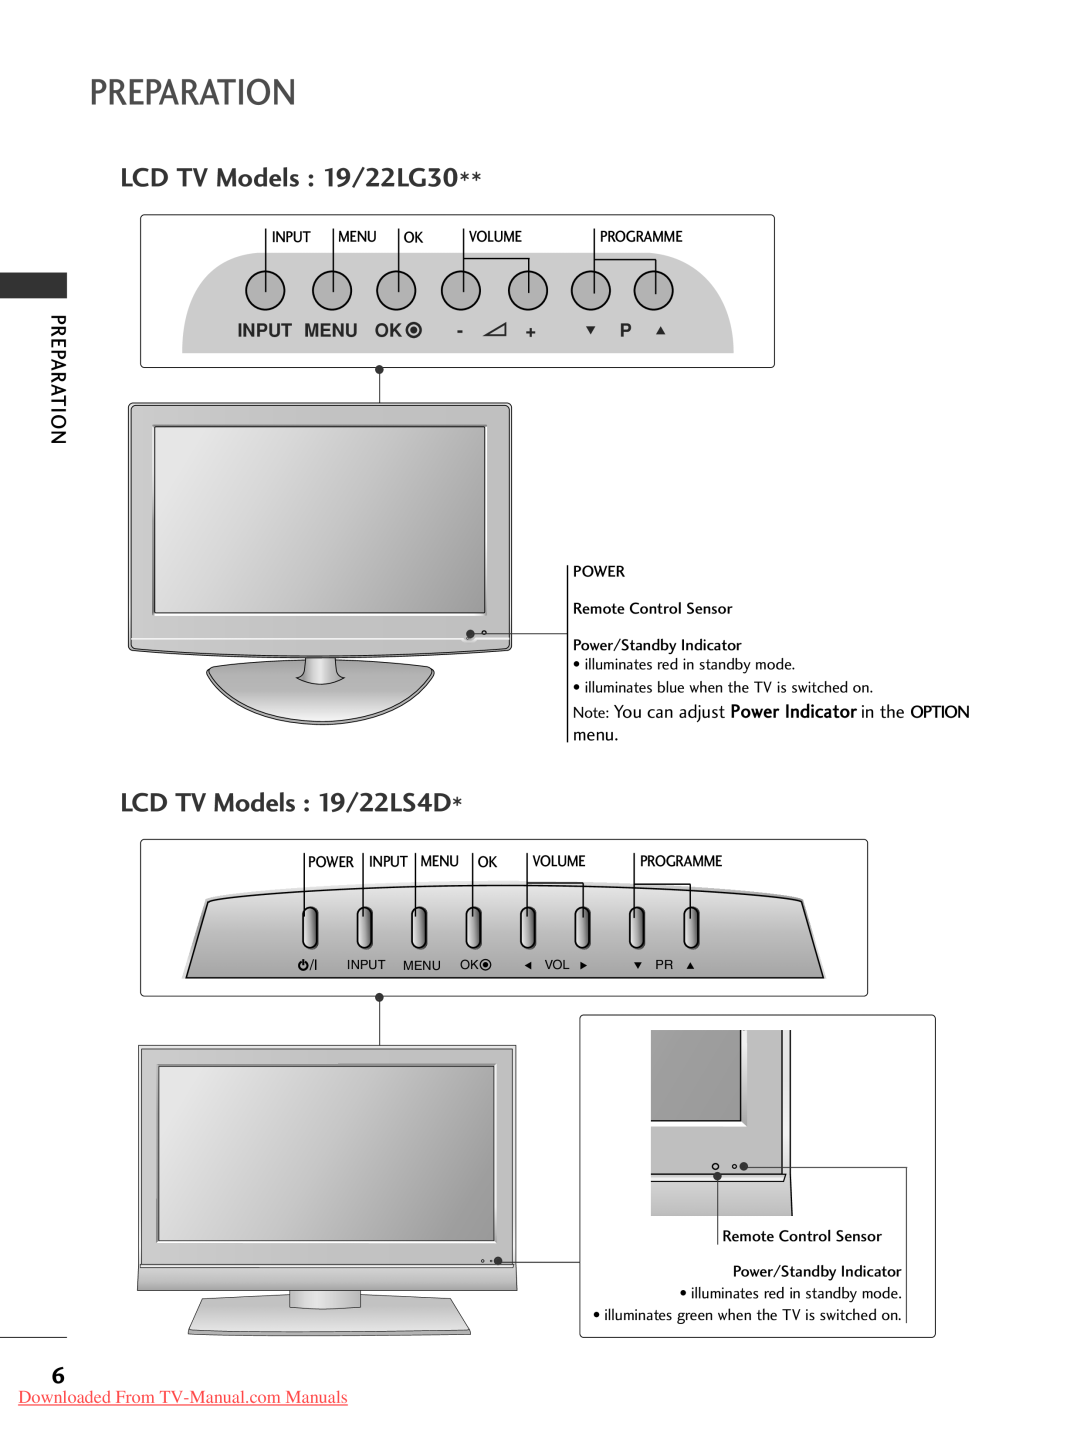 LG Electronics 42 2P PG G1 10 owner manual Preparation, LCD TV Models 19/22LG30, LCD TV Models 19/22LS4D, Input Menu Ok - + 